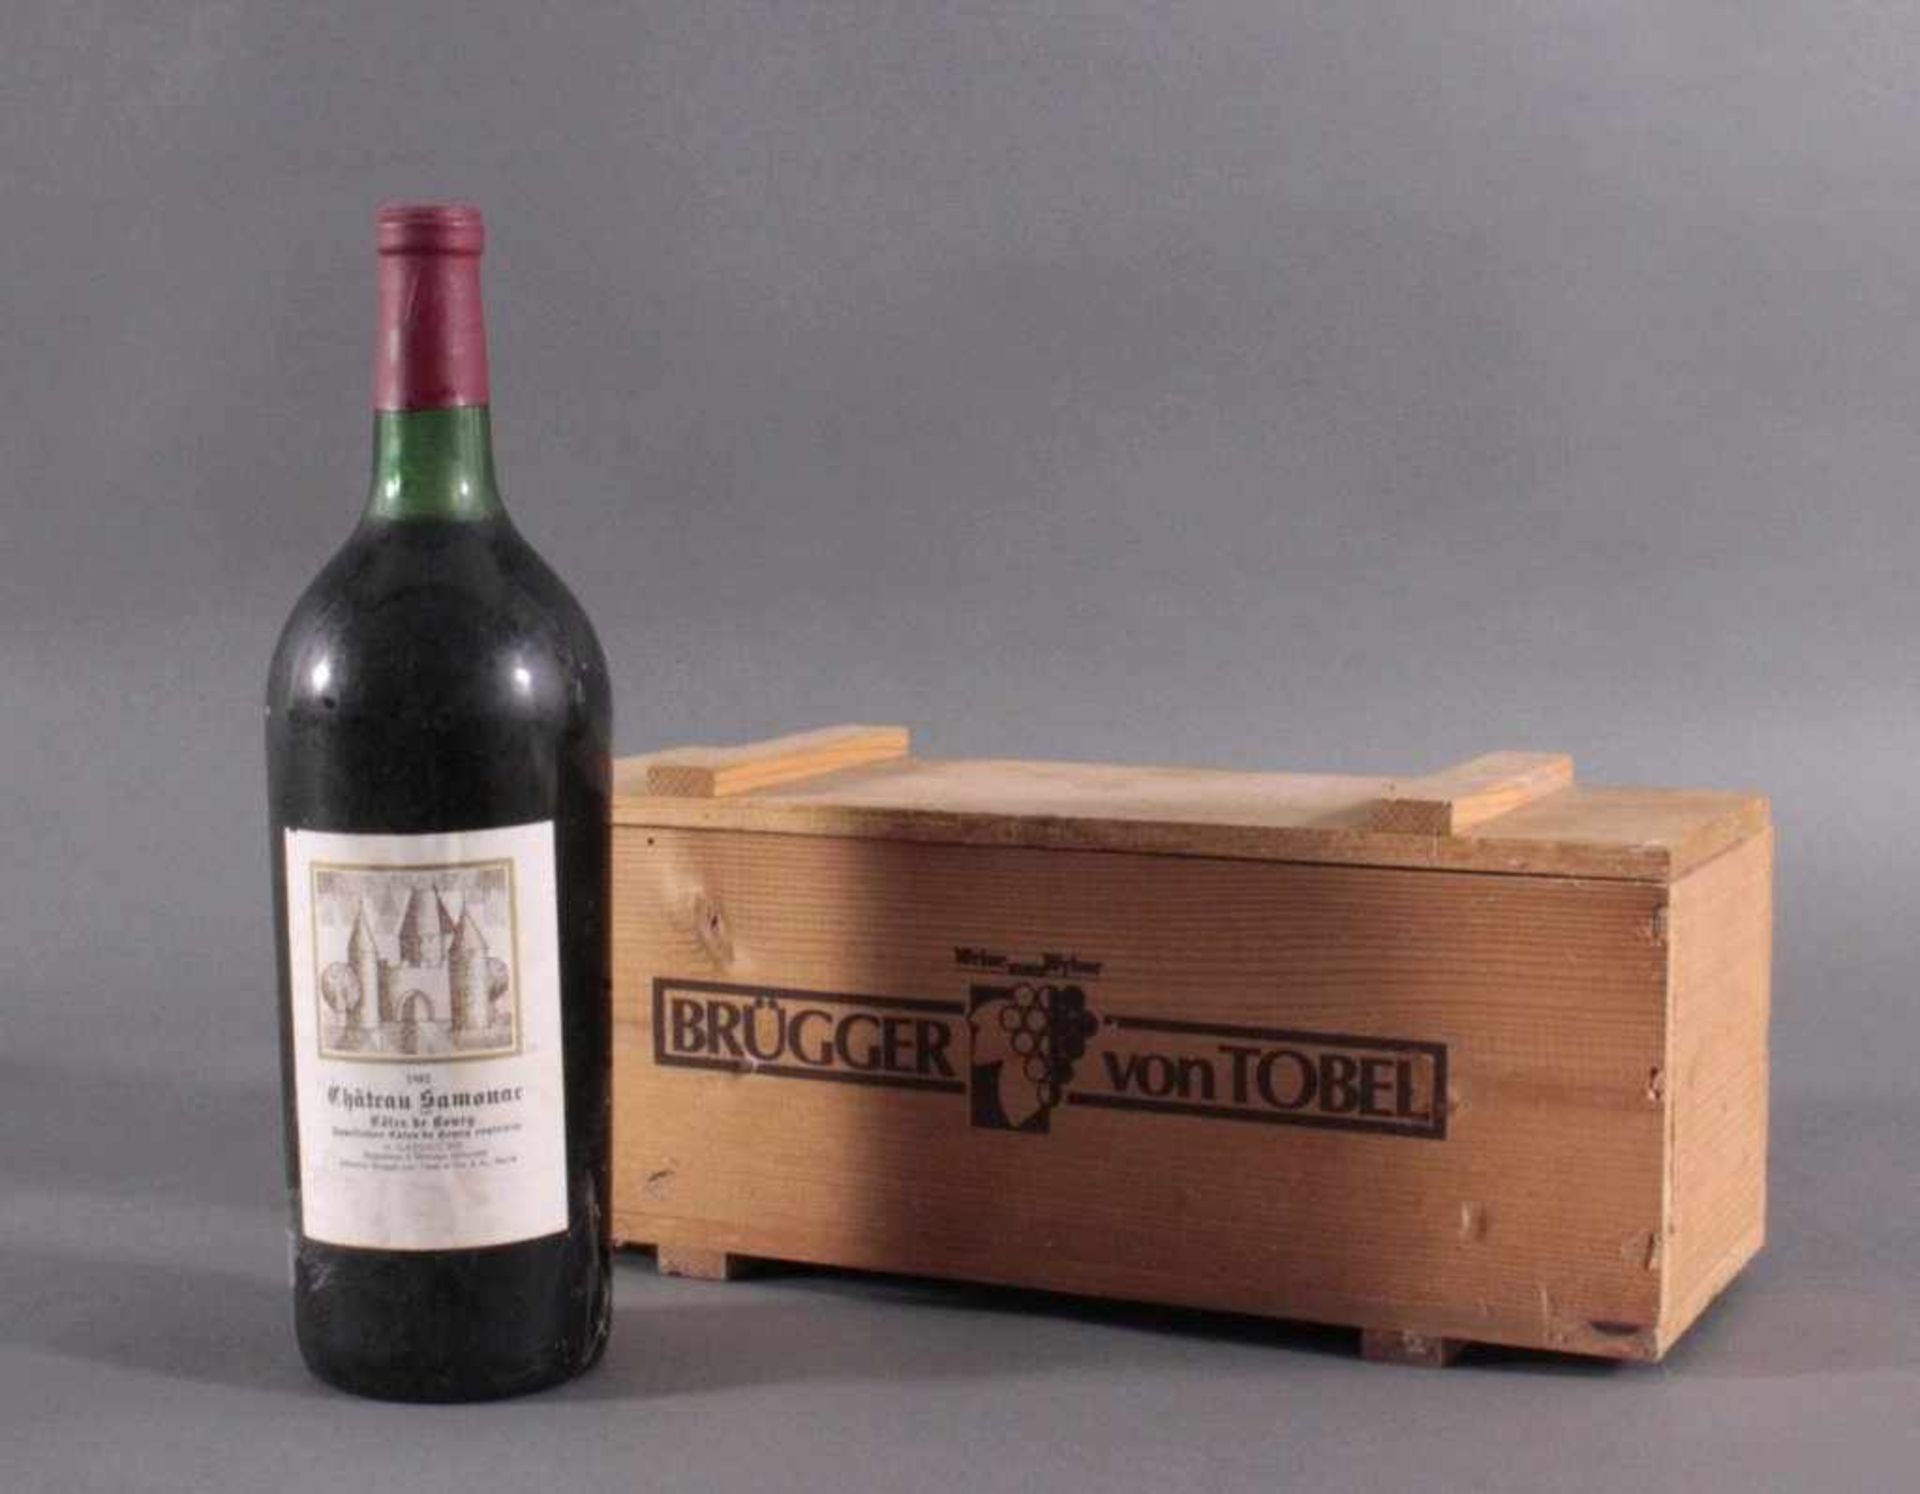 1982er Chateau Samonac, Cotes de Bourg1,5 Liter Flasche, französischer RotweinRetour 13.06.18 - Image 2 of 2